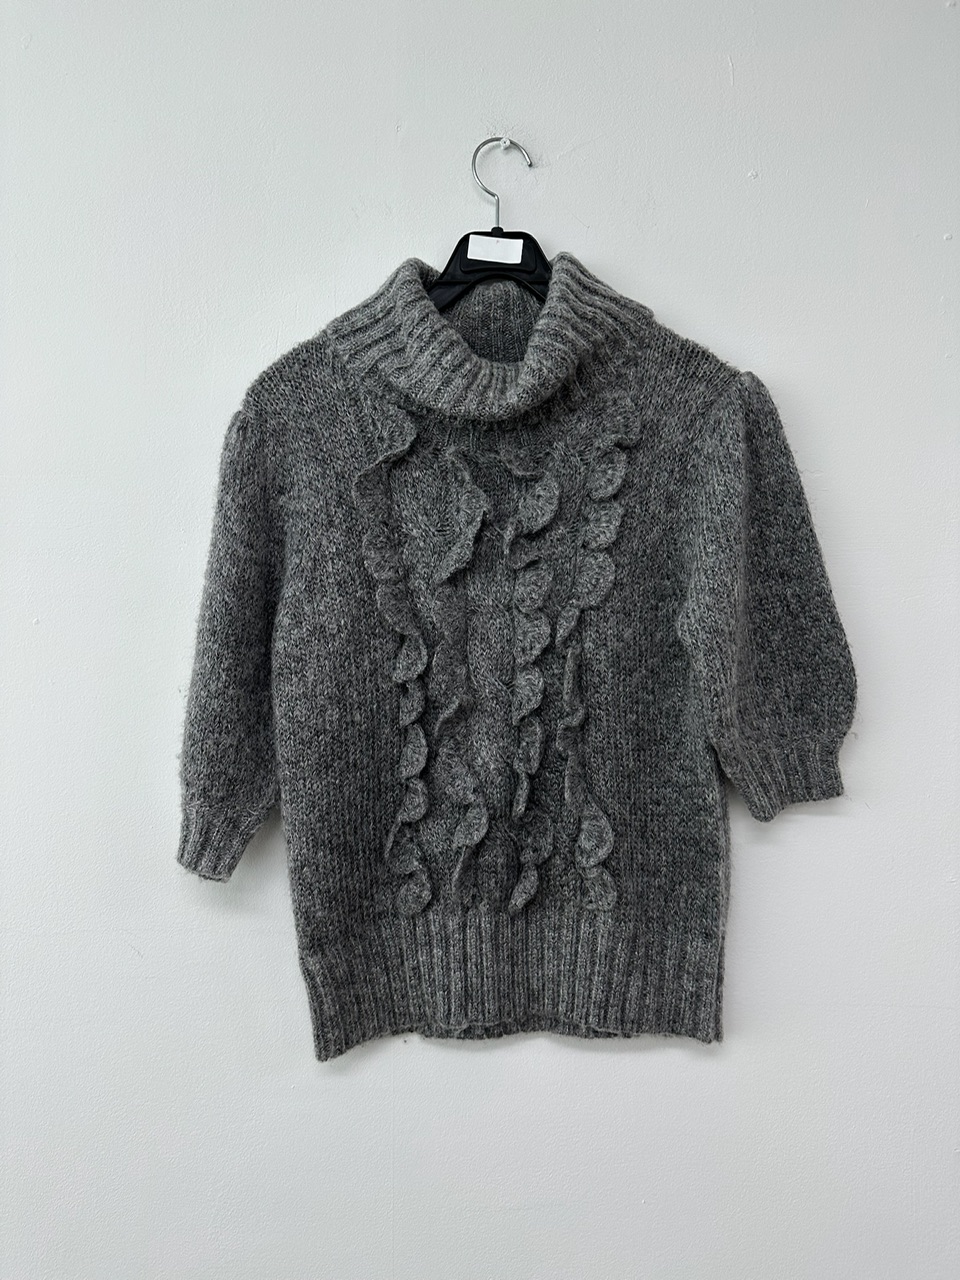 Grey frill knit top